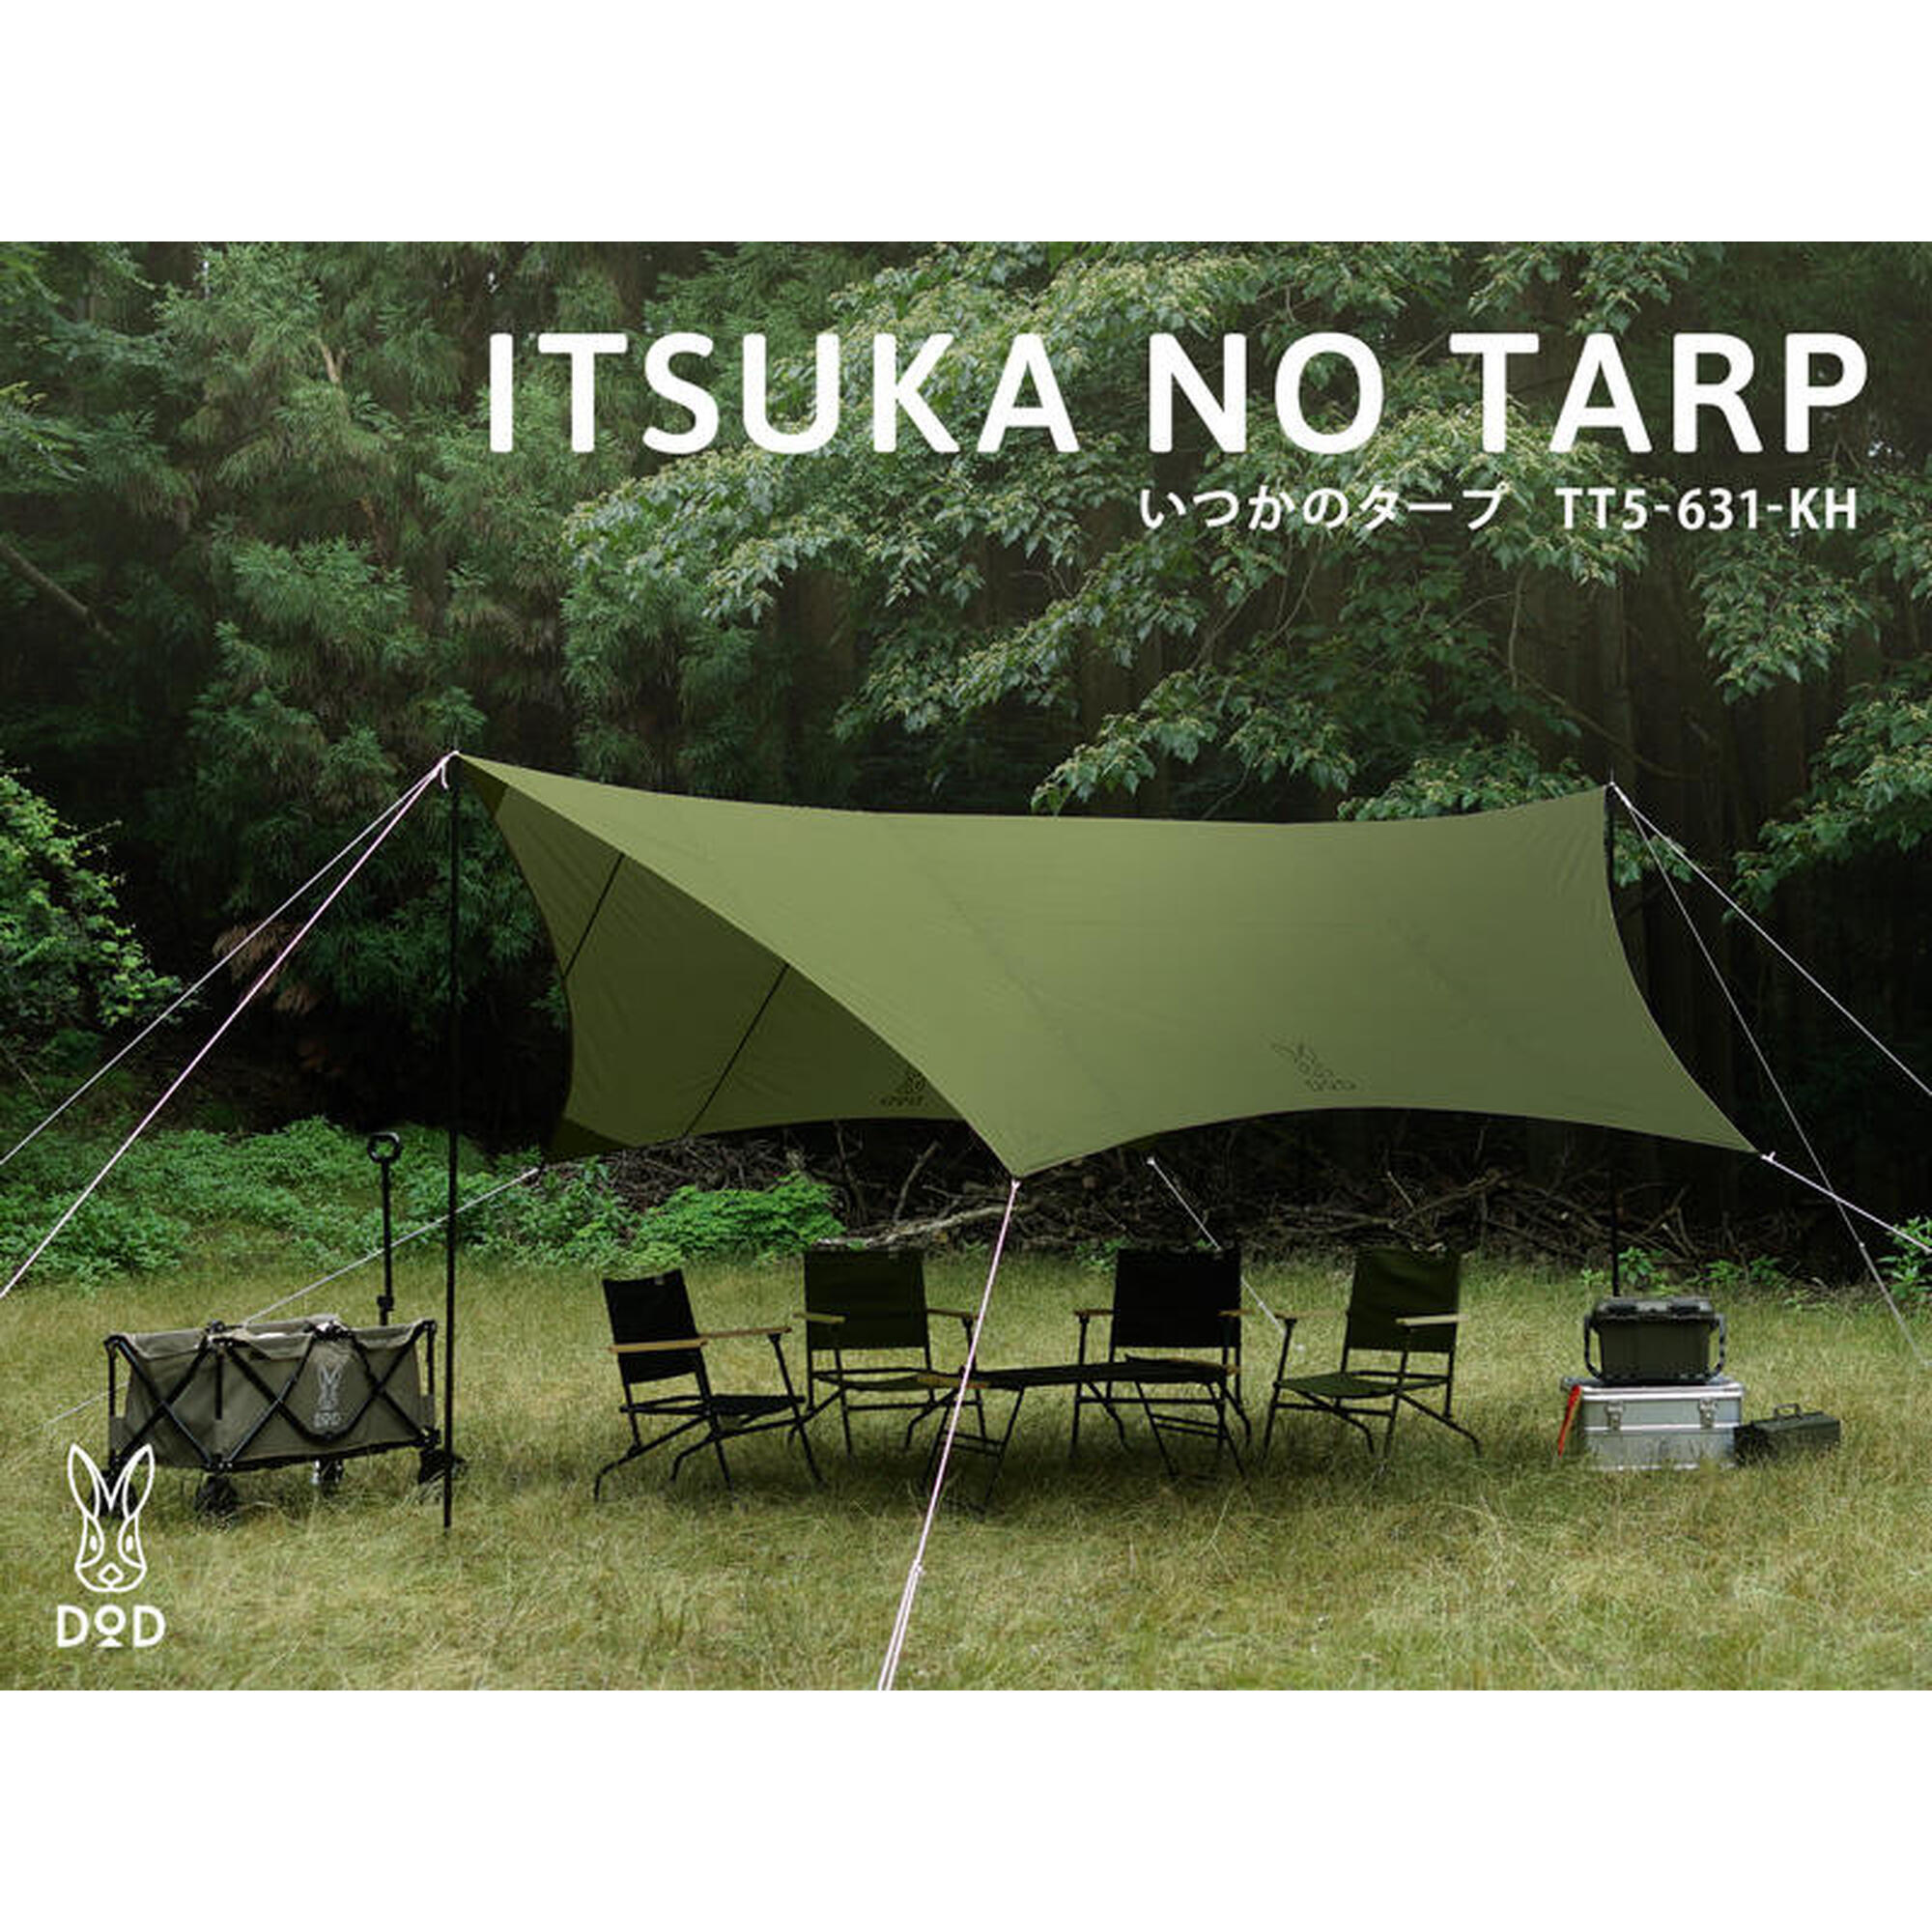 ITSUKA NO TARP TT5-631-KH Camping Tarps - Khaki